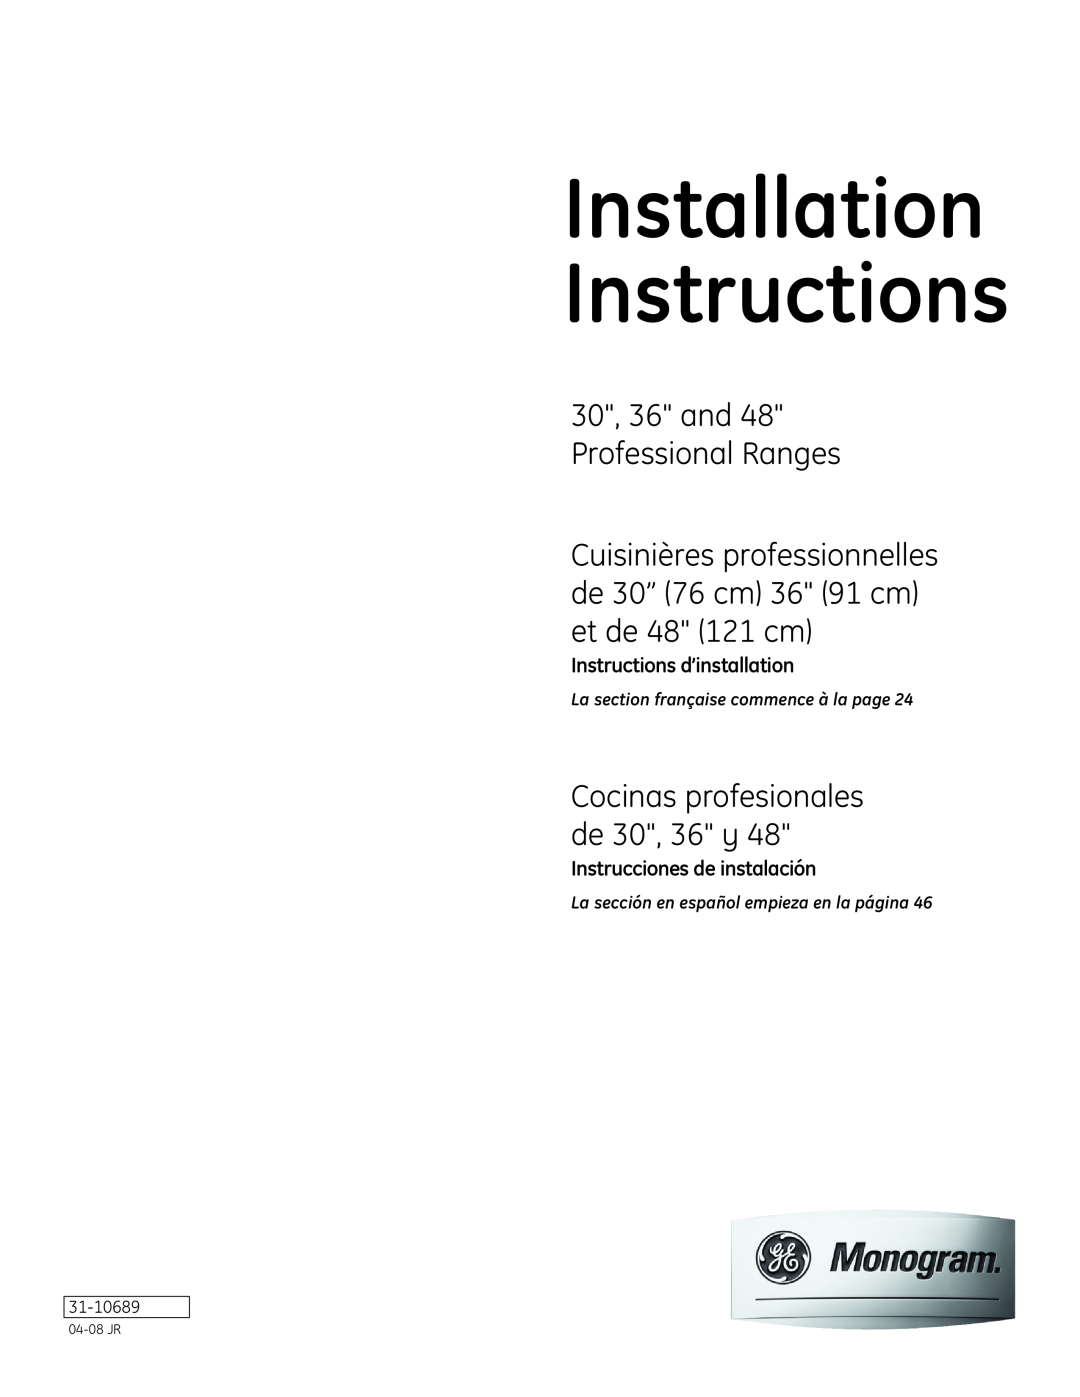 GE Monogram Range installation instructions Instructions d’installation, Instrucciones de instalación, 04-08 JR 